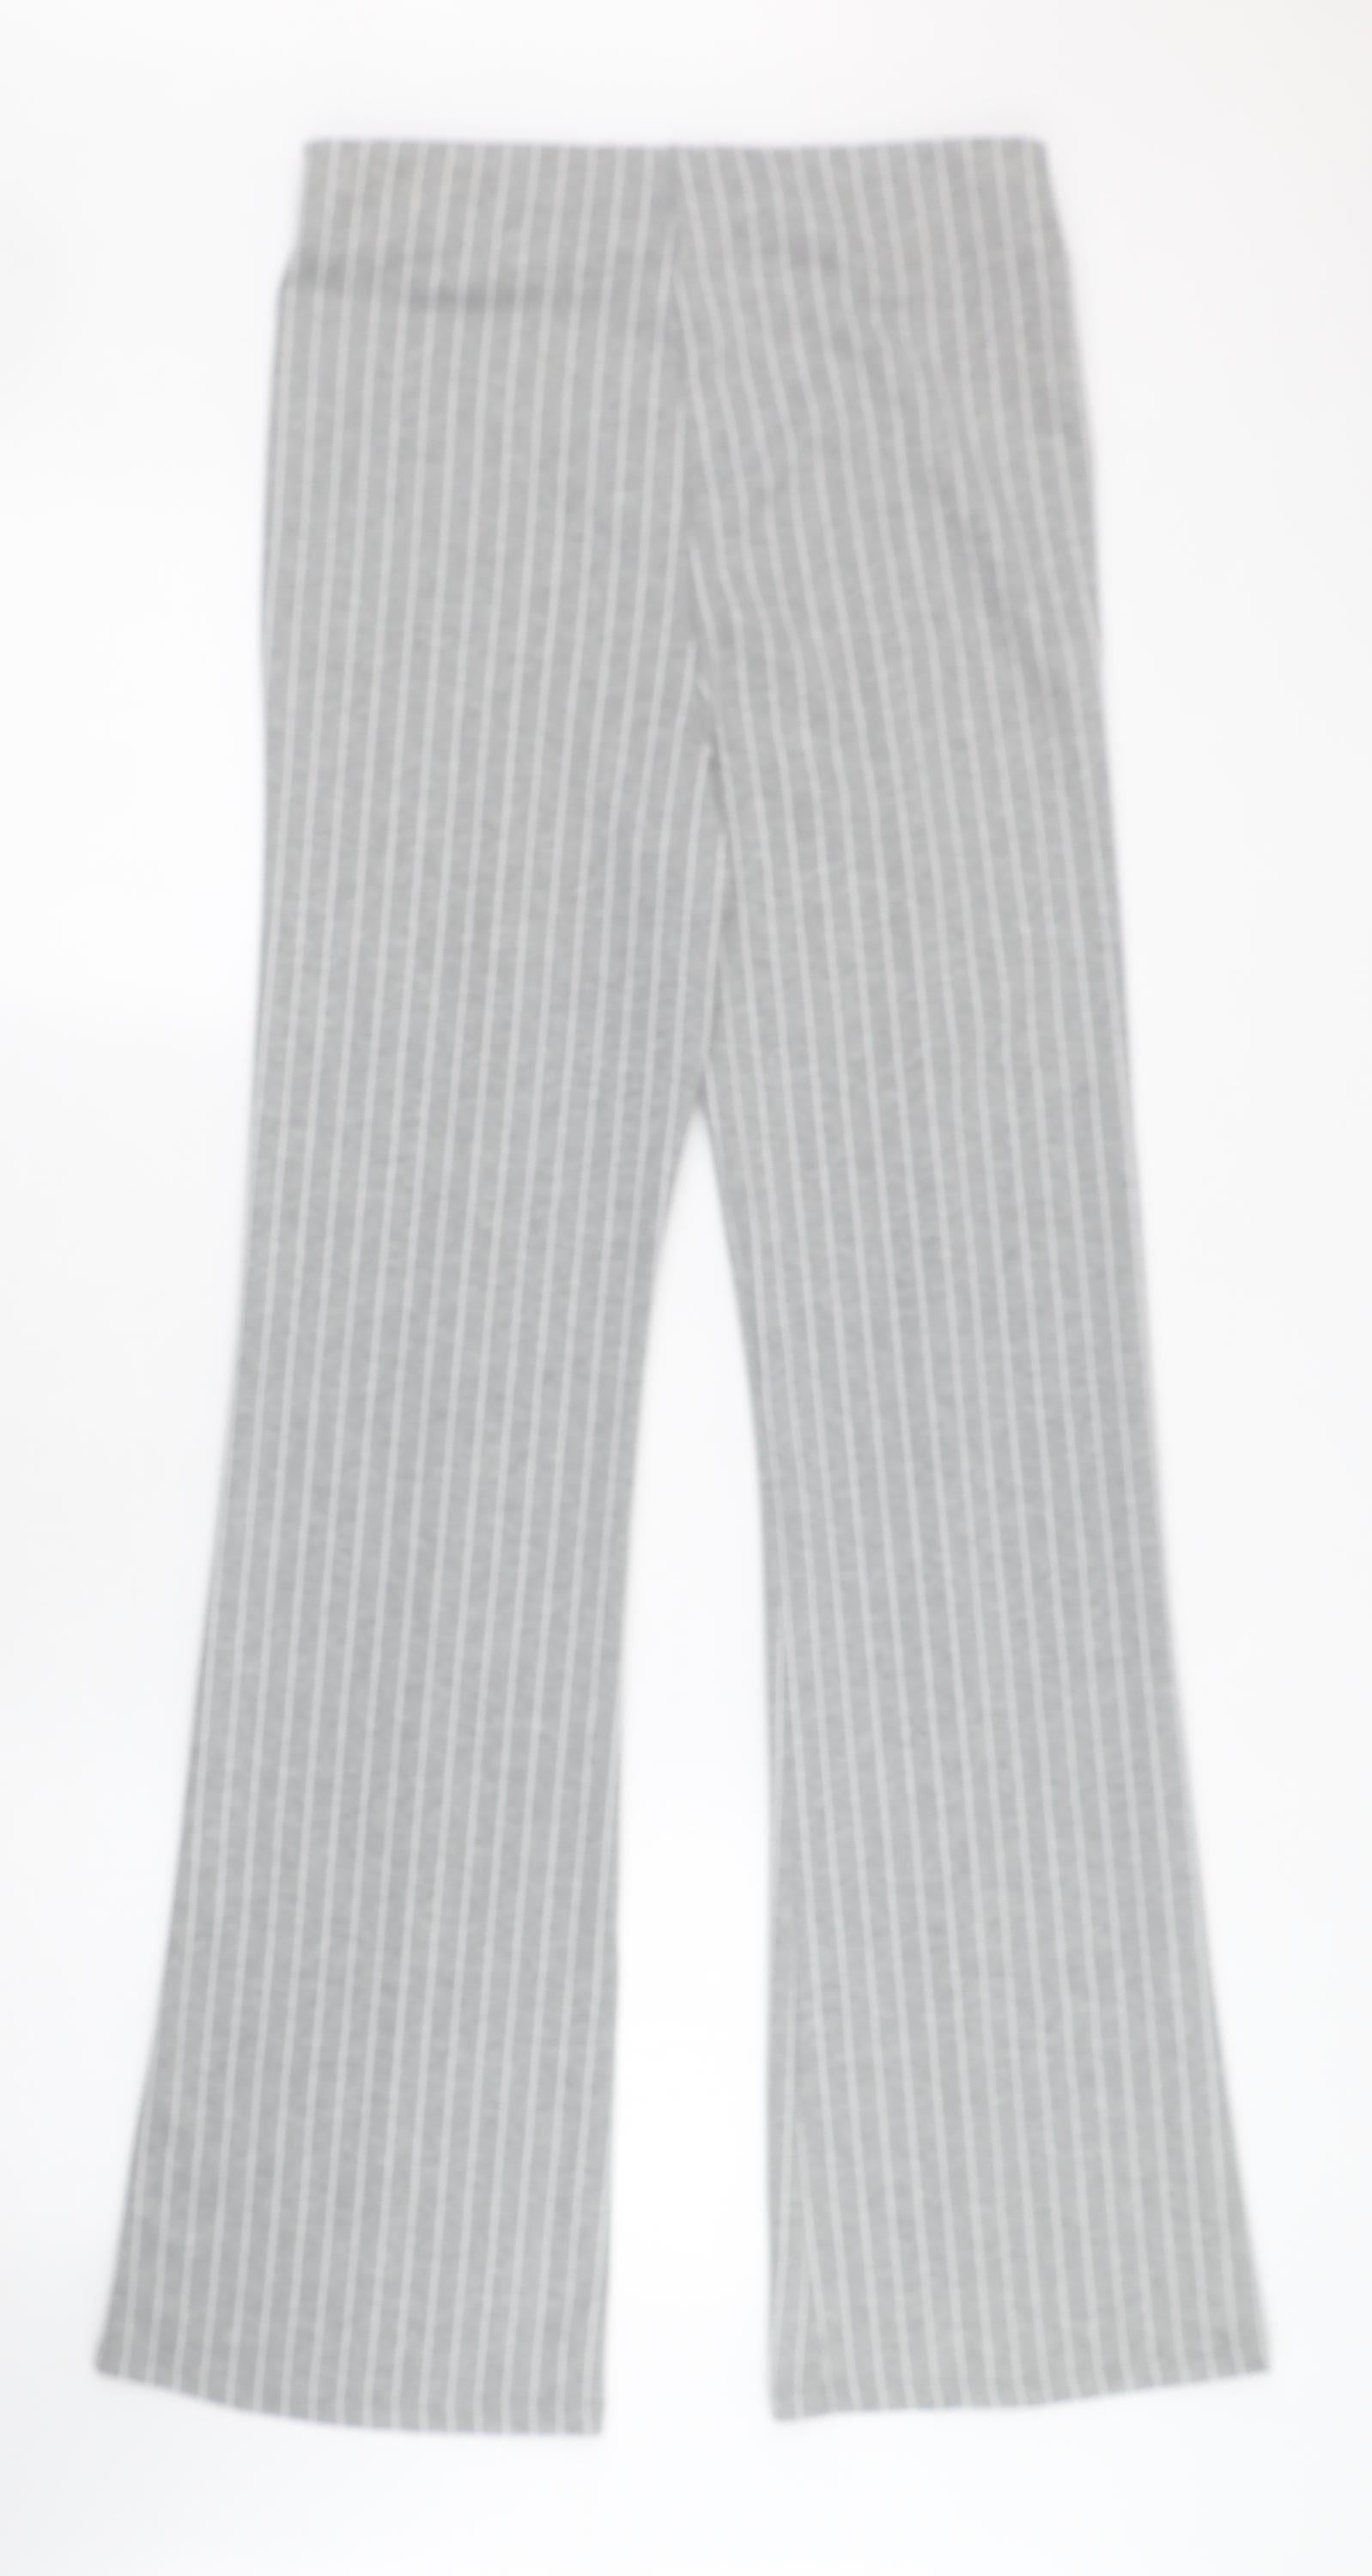 Ladies long linen trousers by Primark | Vinted